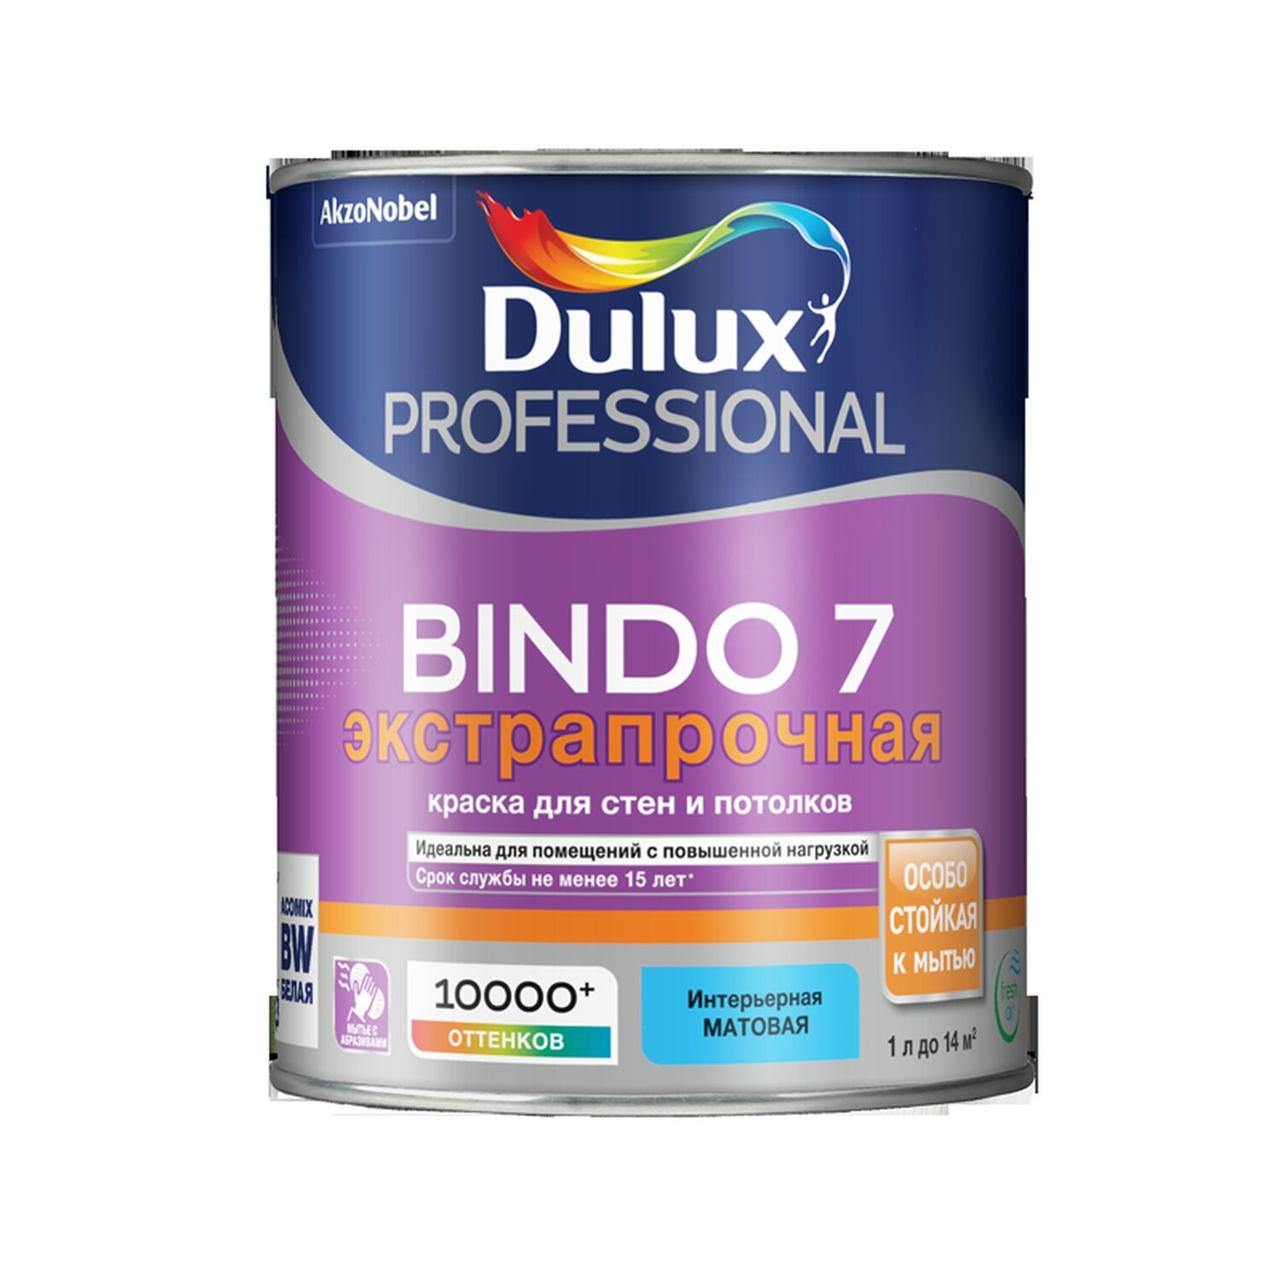 Dulux - Bindo 7 - 0.9л (BC)- Матовая - Краска для стен и потолков(прозрачная база)